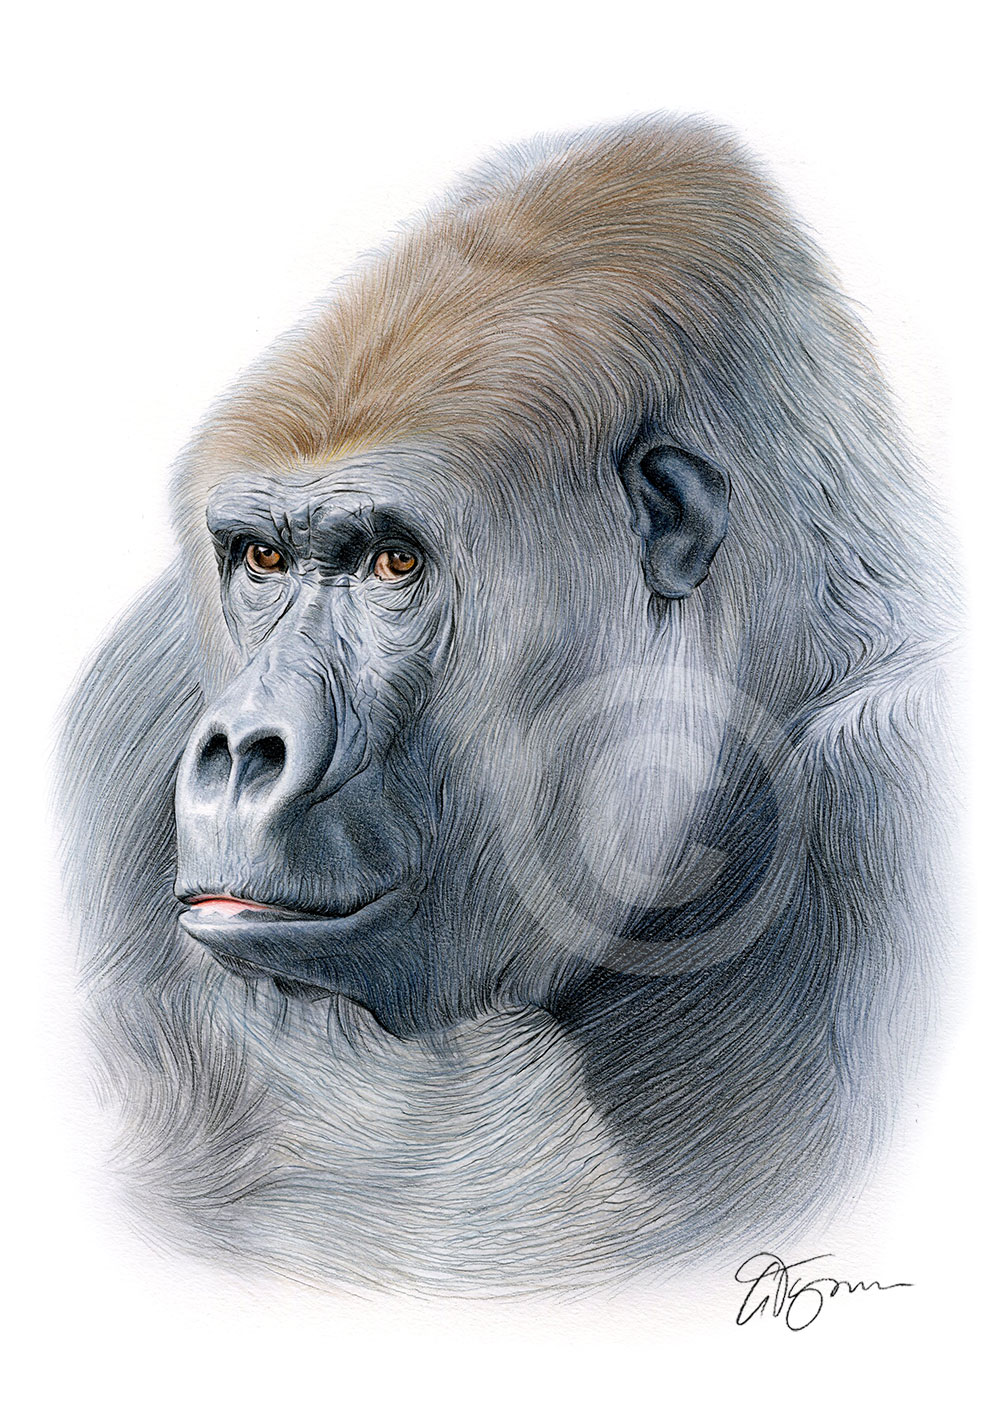 Colour pencil drawing of a mountain gorilla by artist Gary Tymon